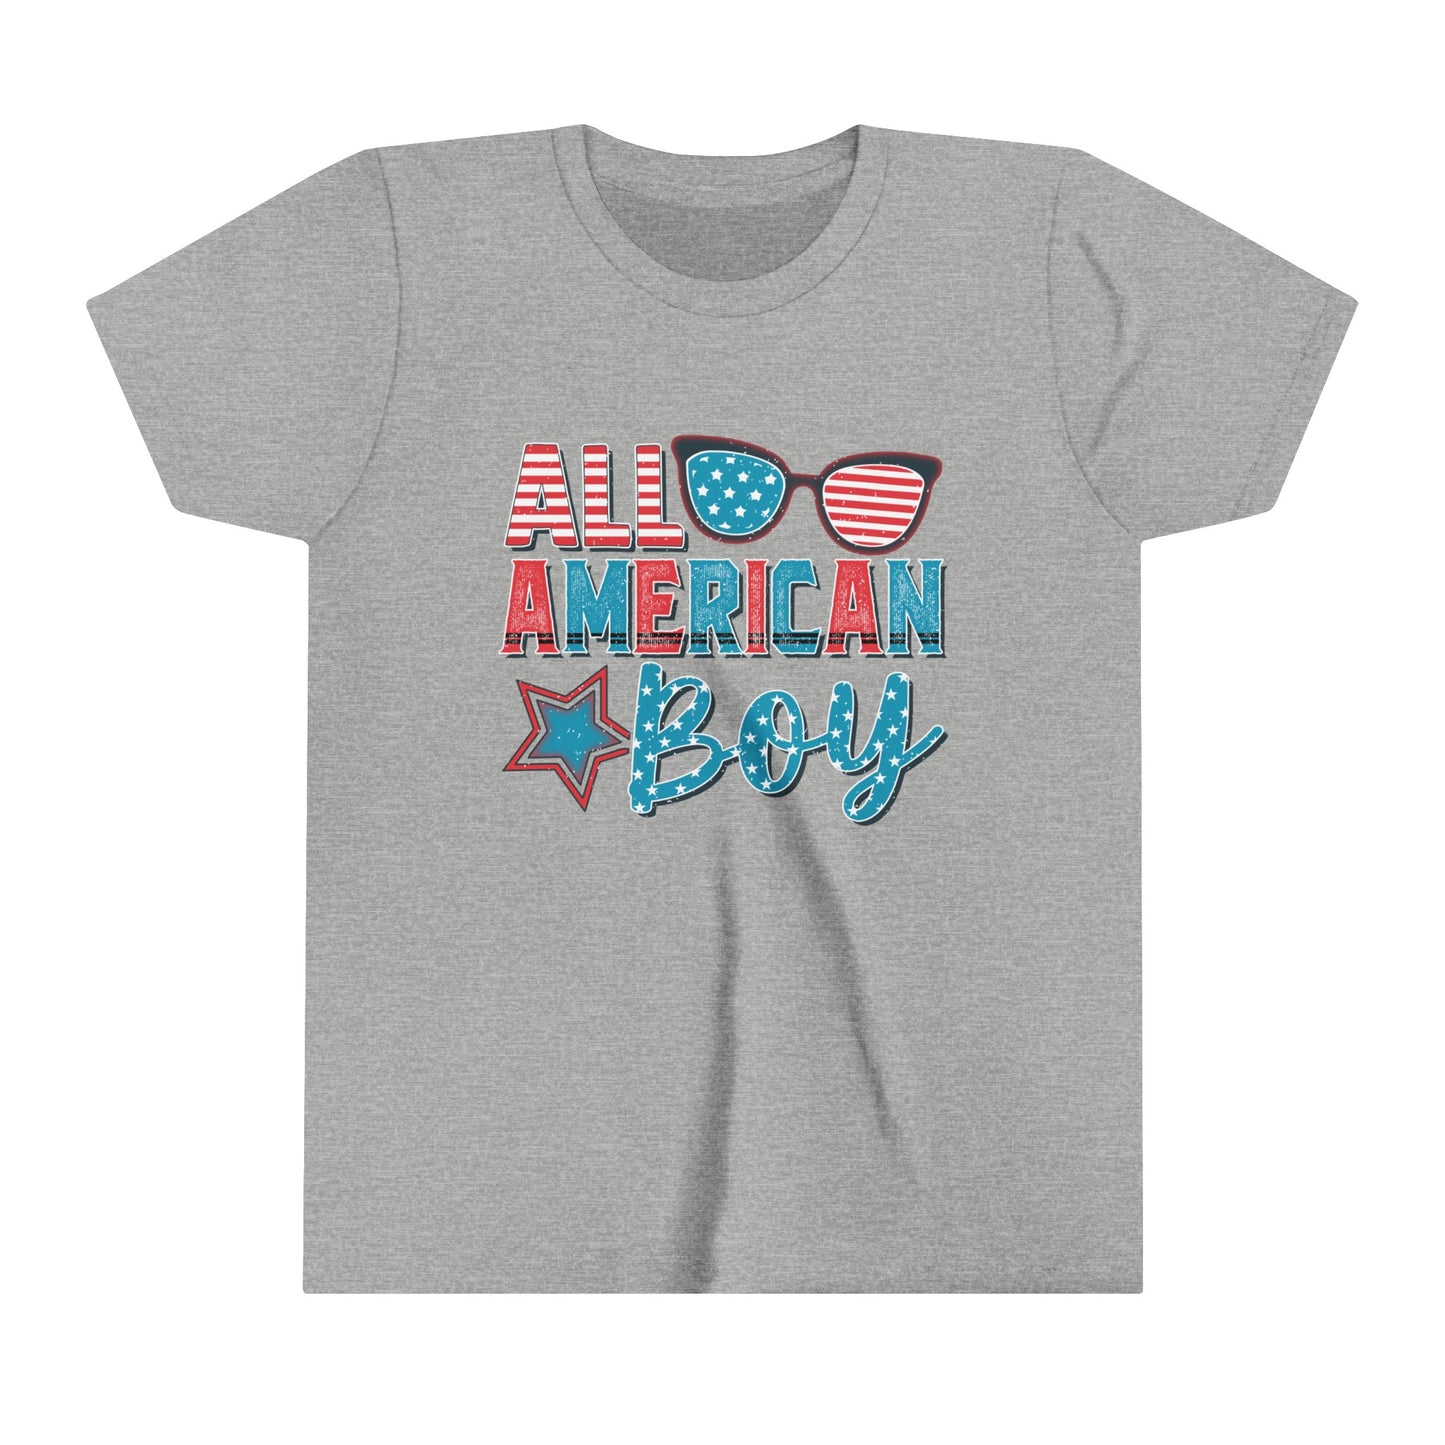 All American Boy 4th of July USA Youth Shirt